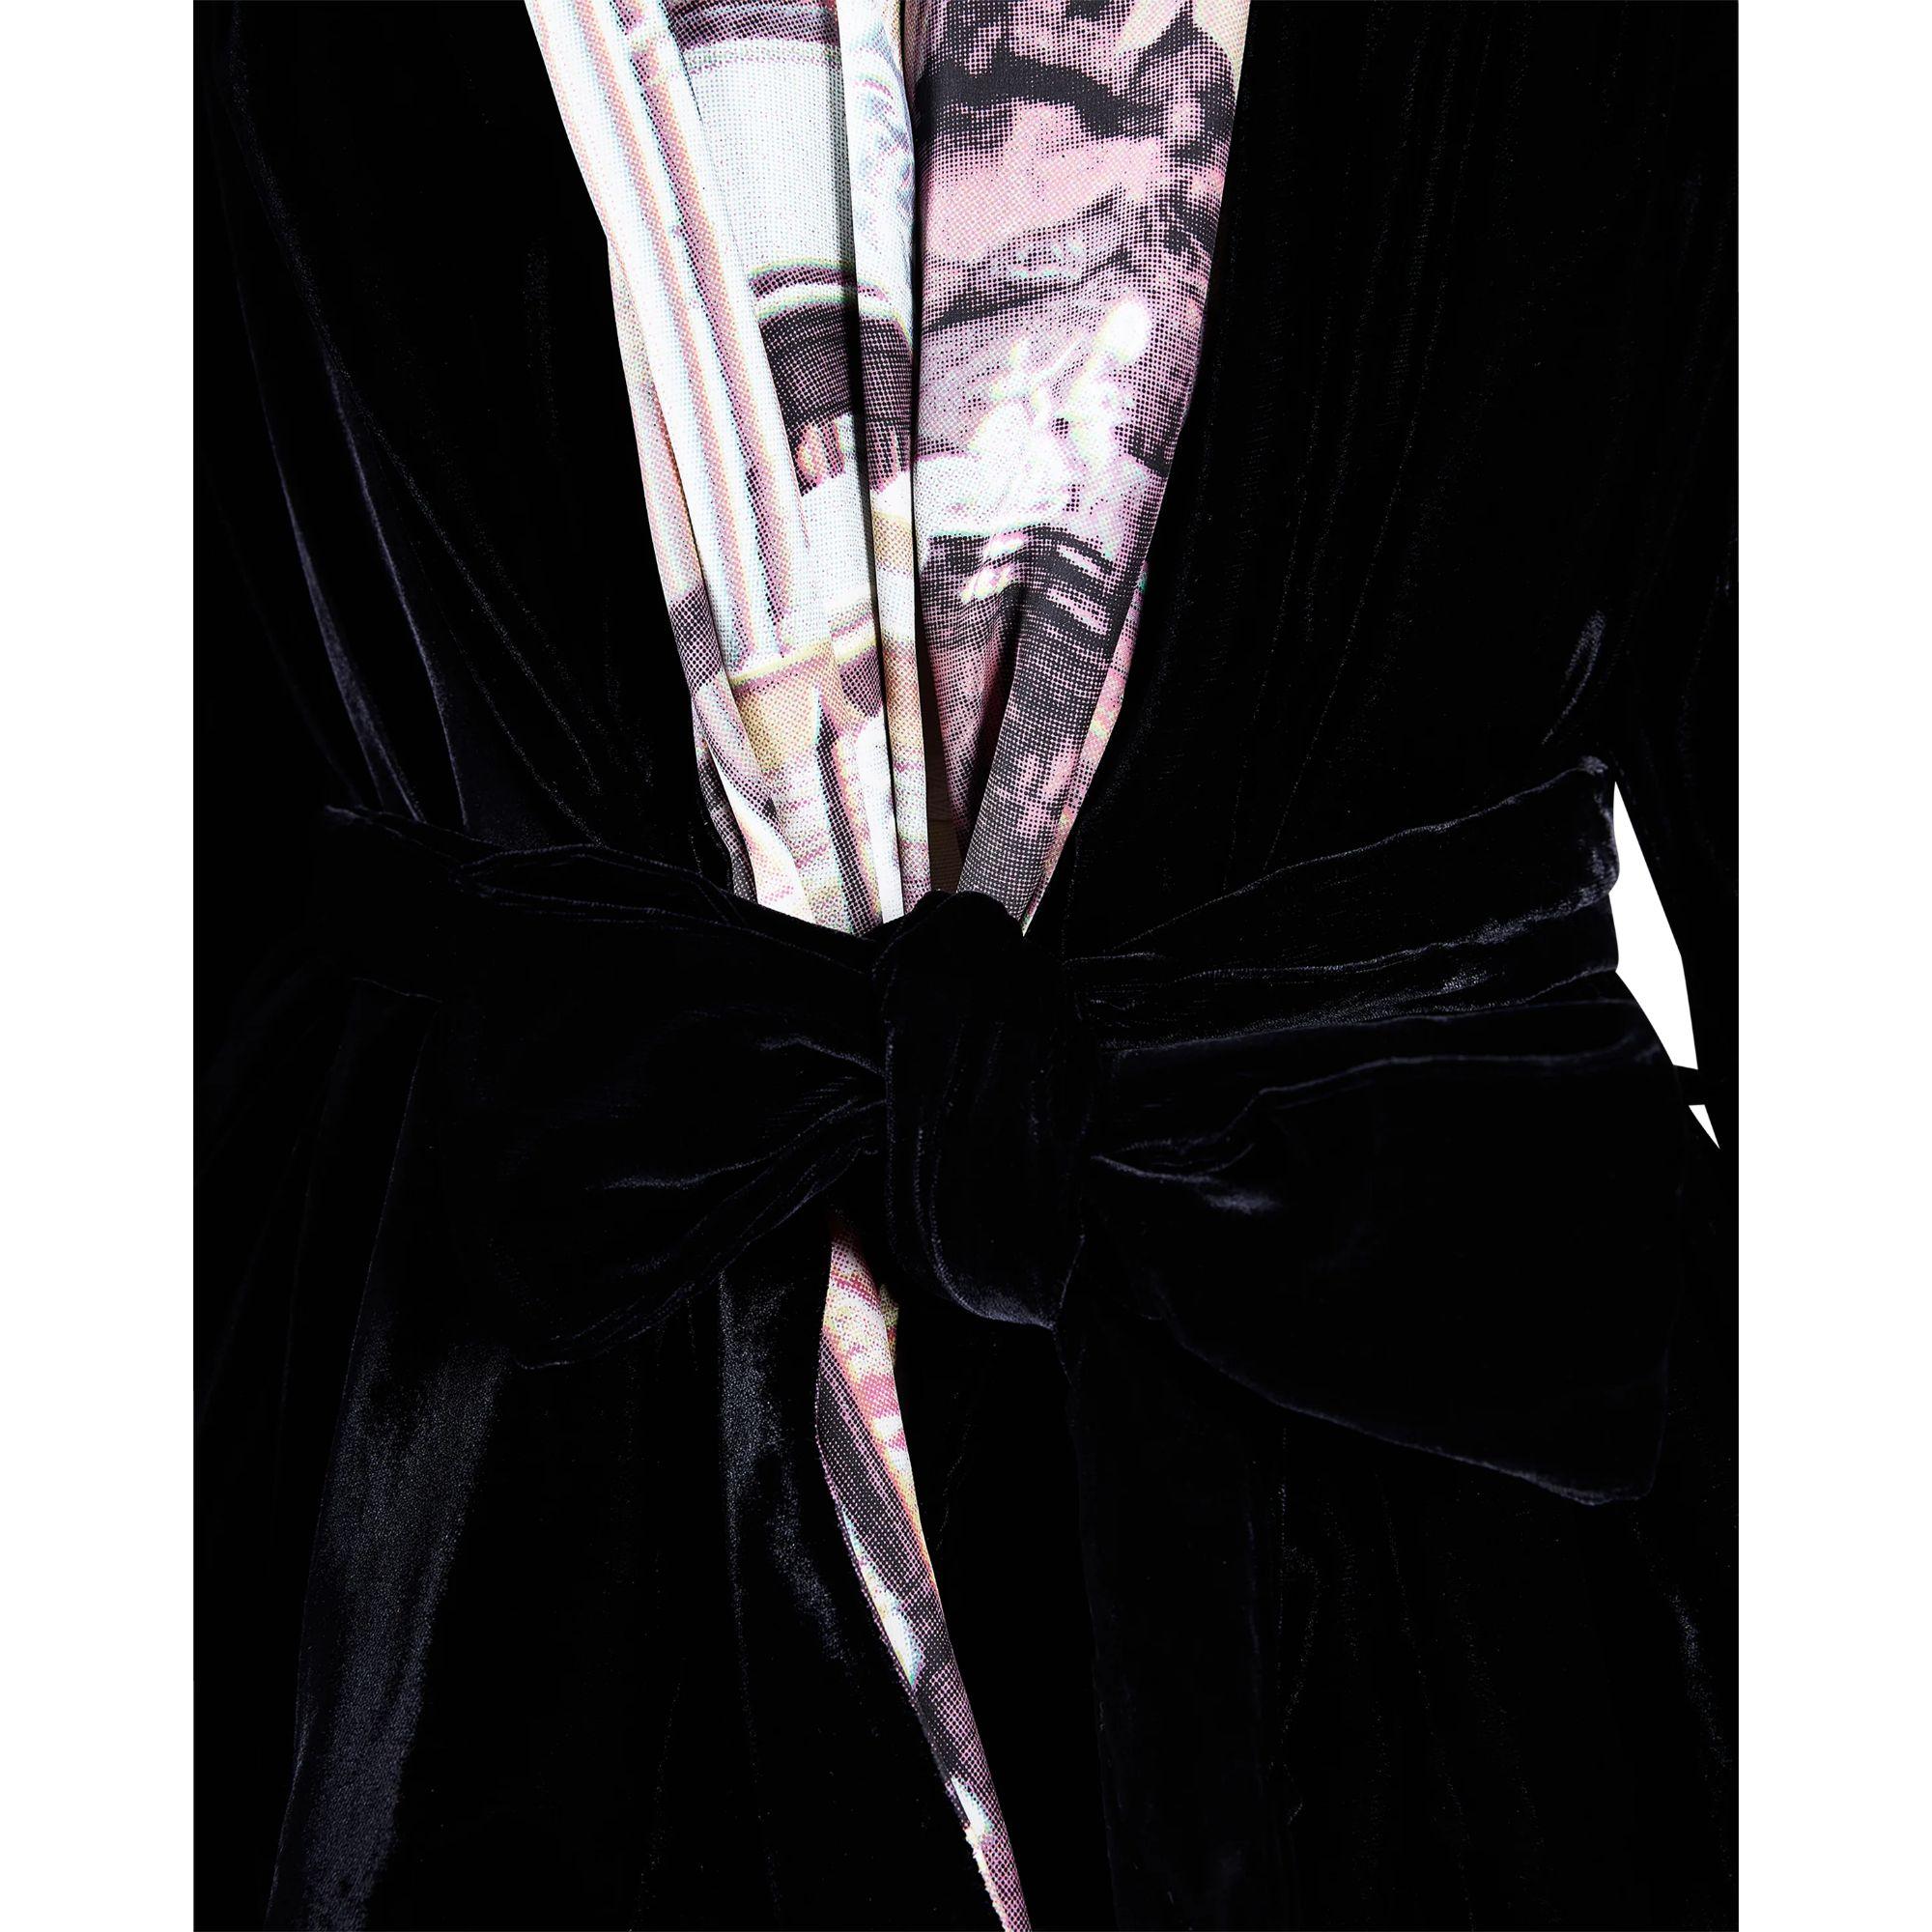 S/S 1992 Vivienne Westwood 'Salon' Collection Printed Velvet Shawl Jacket 4